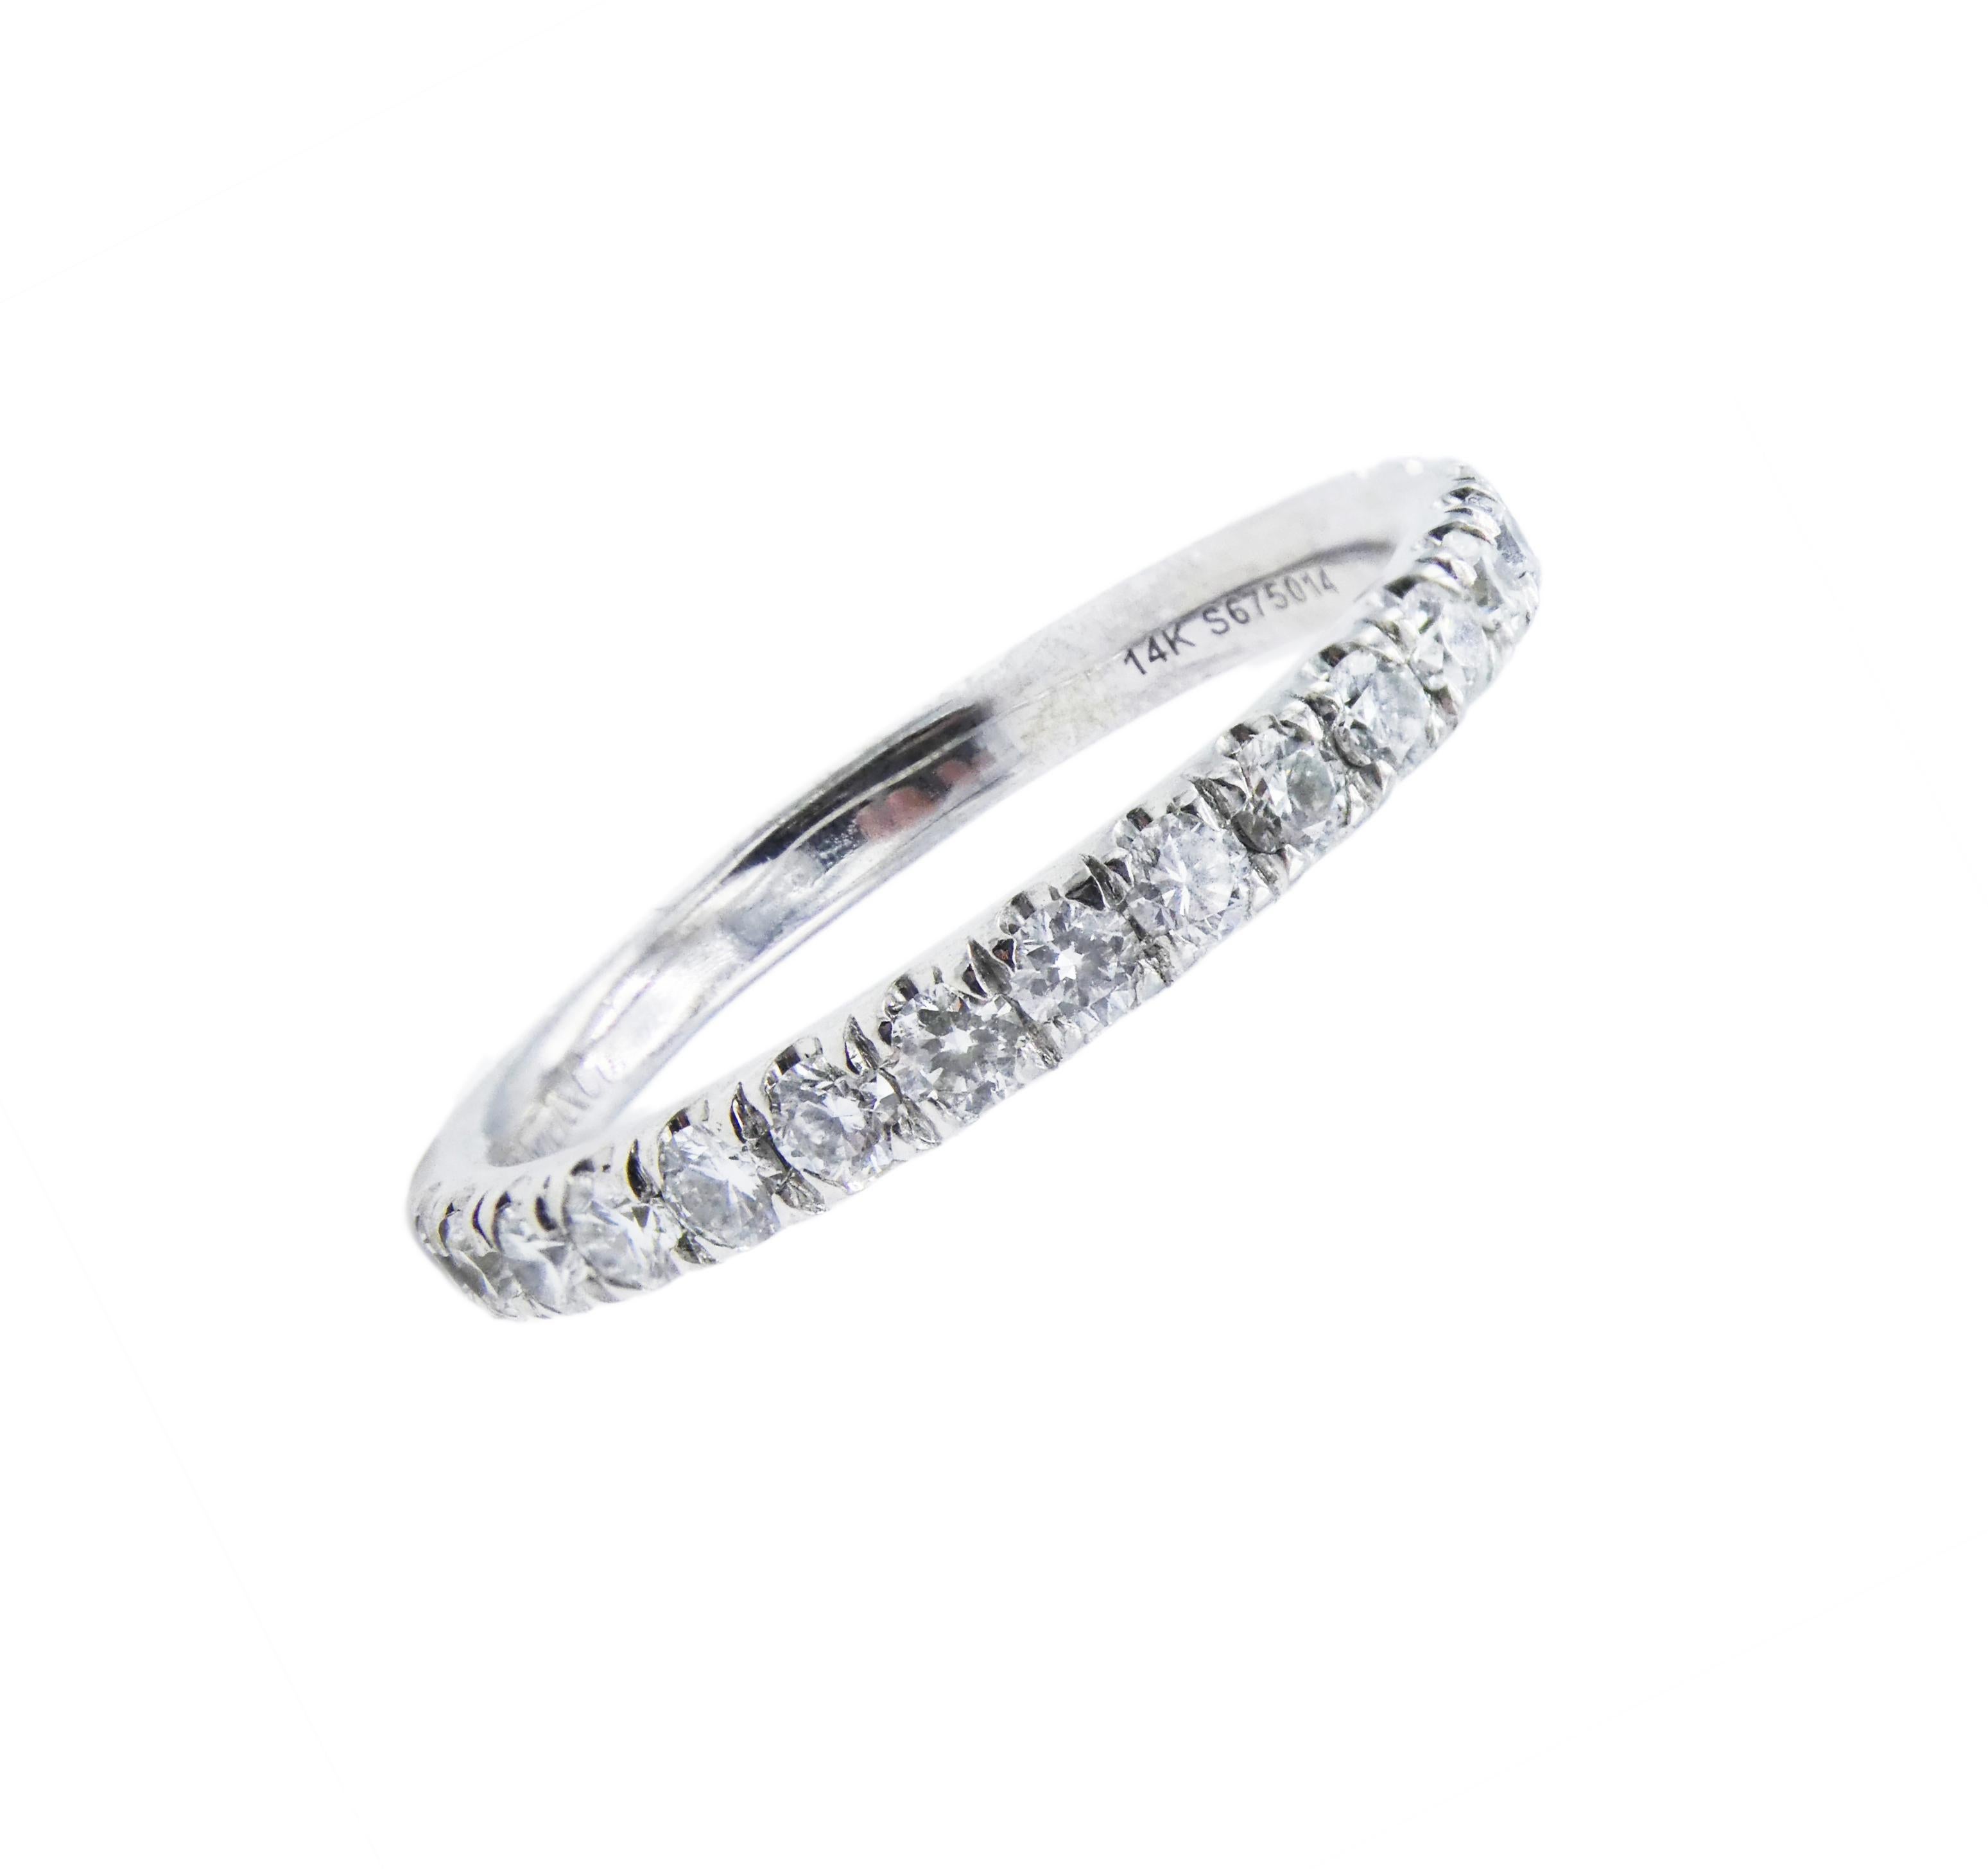 14 Karat Diamond Wedding Band 0.50 CTW White Gold Half Ring Size 6

Metal: 14k White Gold
Weight: 2.17 grams
Diamonds: 17 round brilliant cut diamonds, approx. .50 CTW G VS
Size: 6 (US)
Width: 2.4MM
